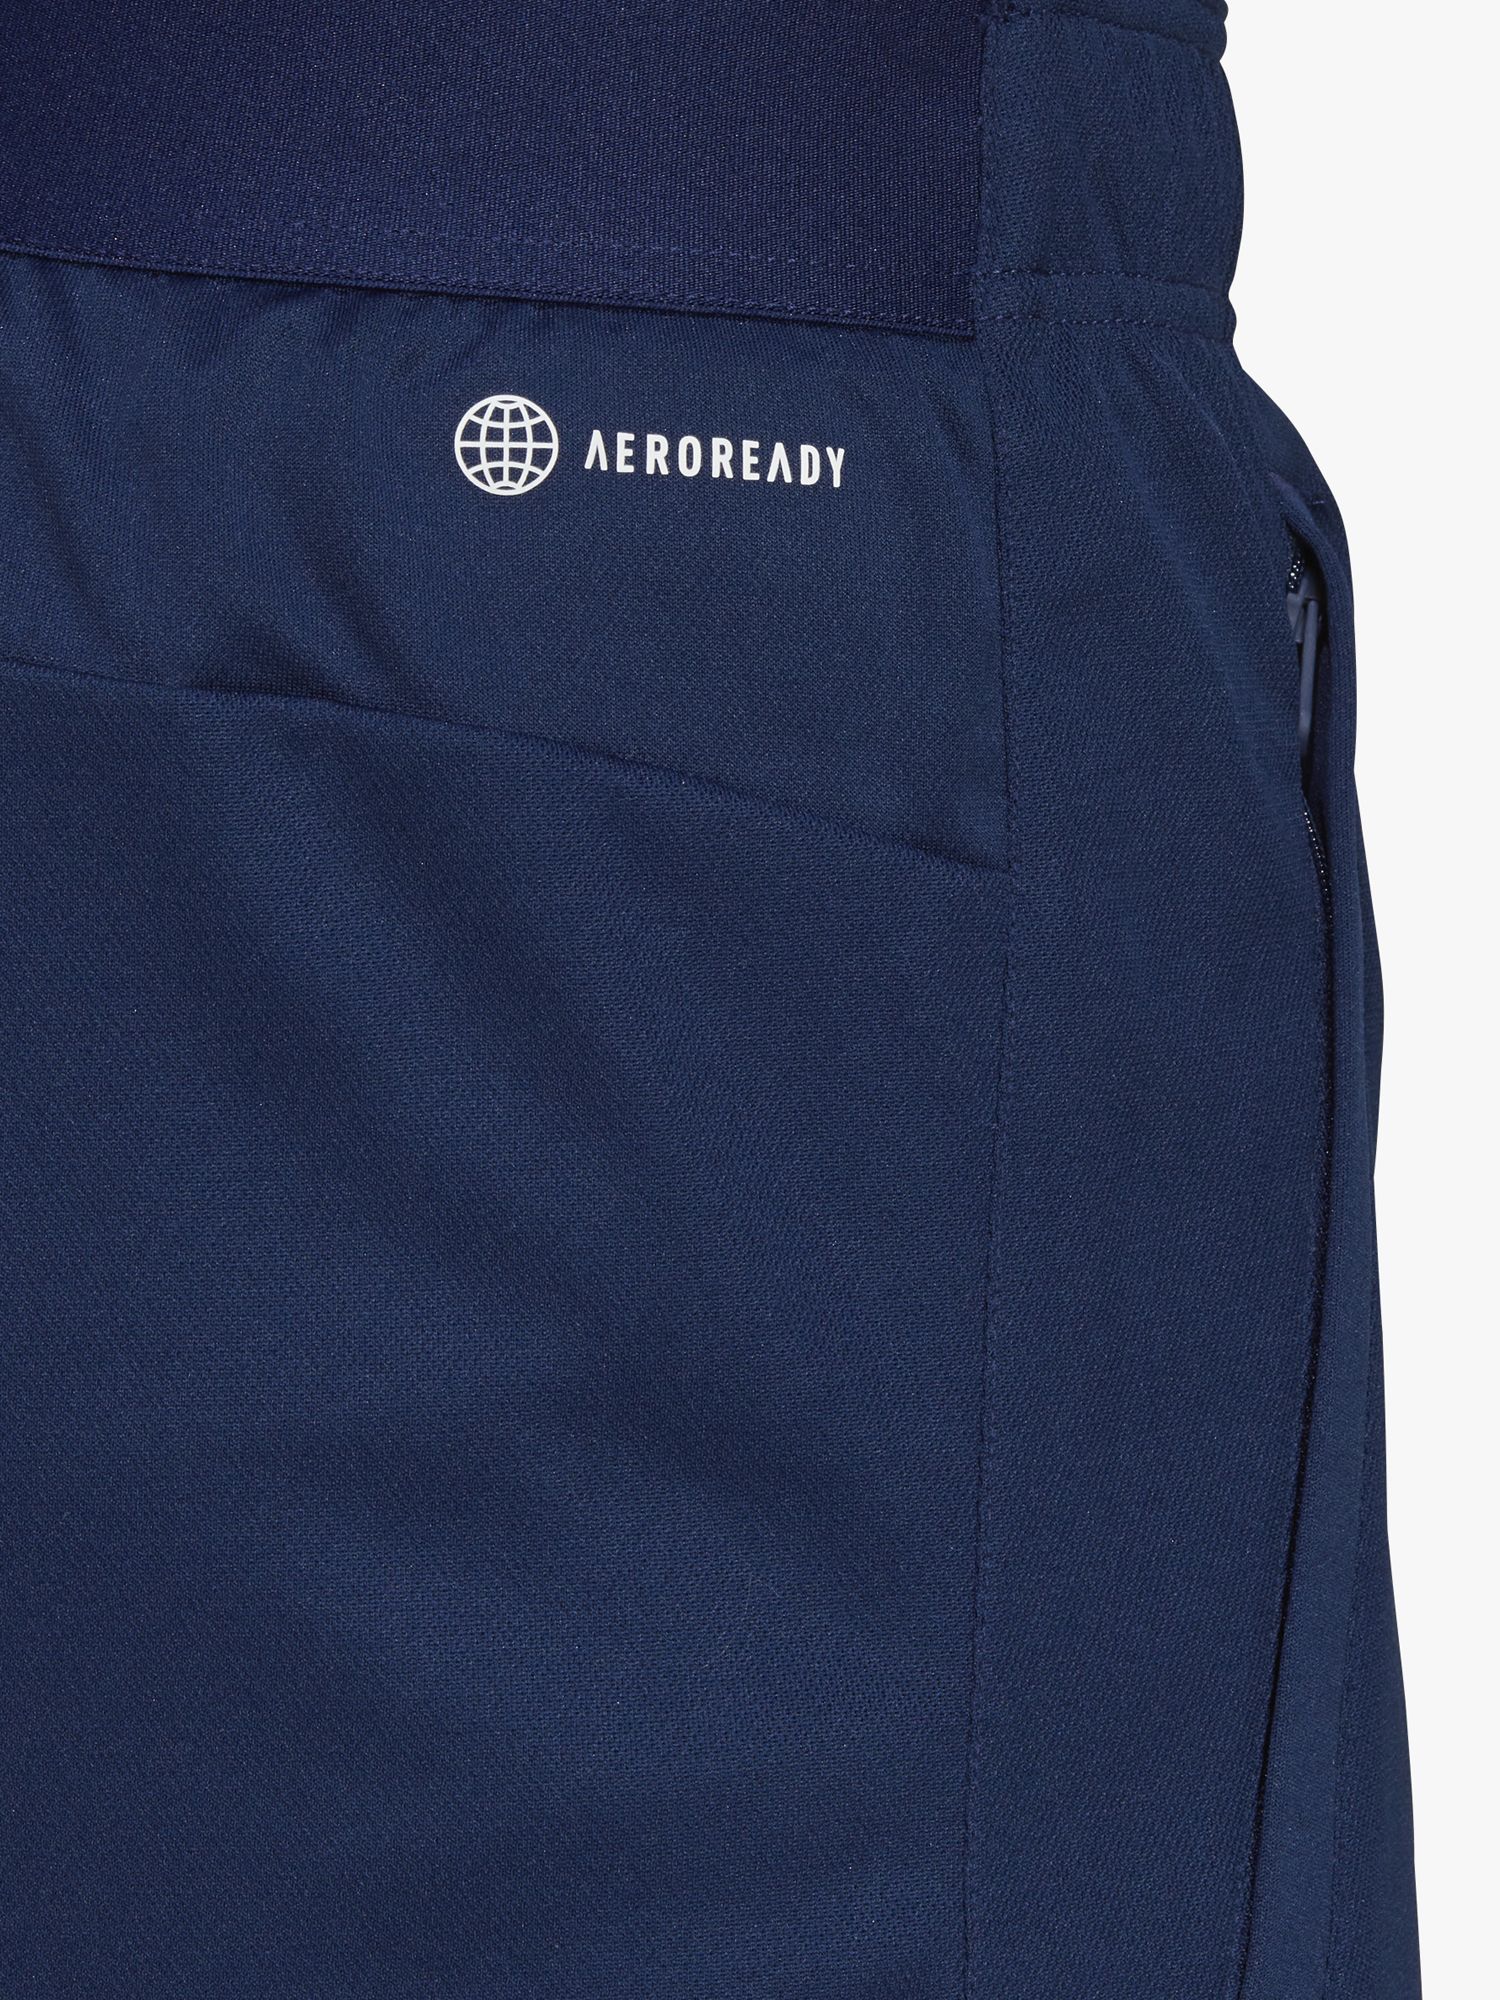 adidas AEROREADY Train Essentials Logo Gym Shorts, Dark Blue/White, S